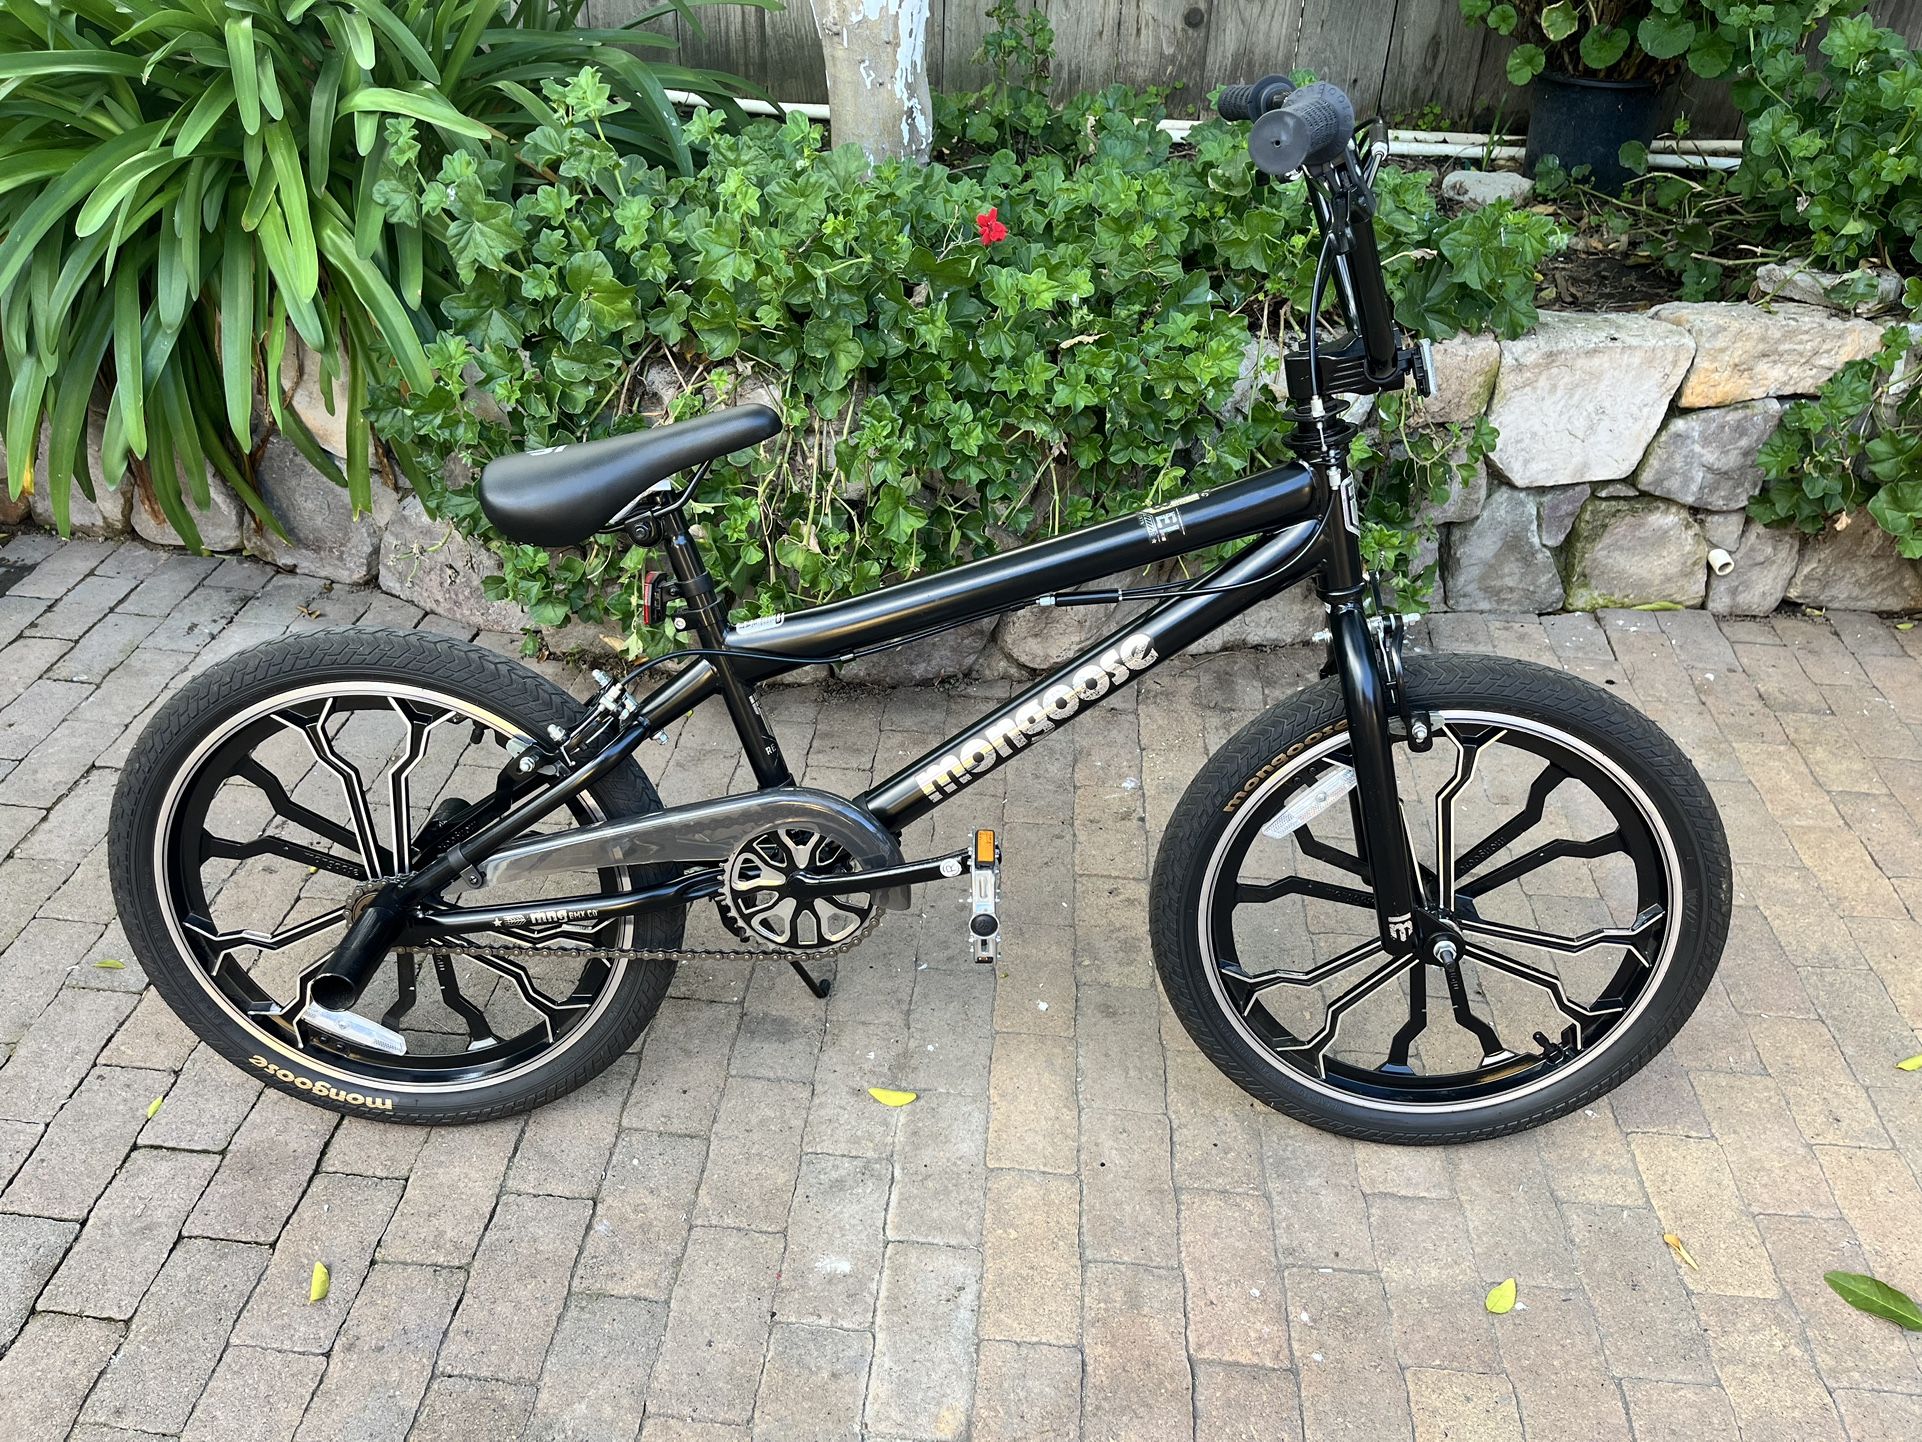 Black 20” Mongoose BMX Bike